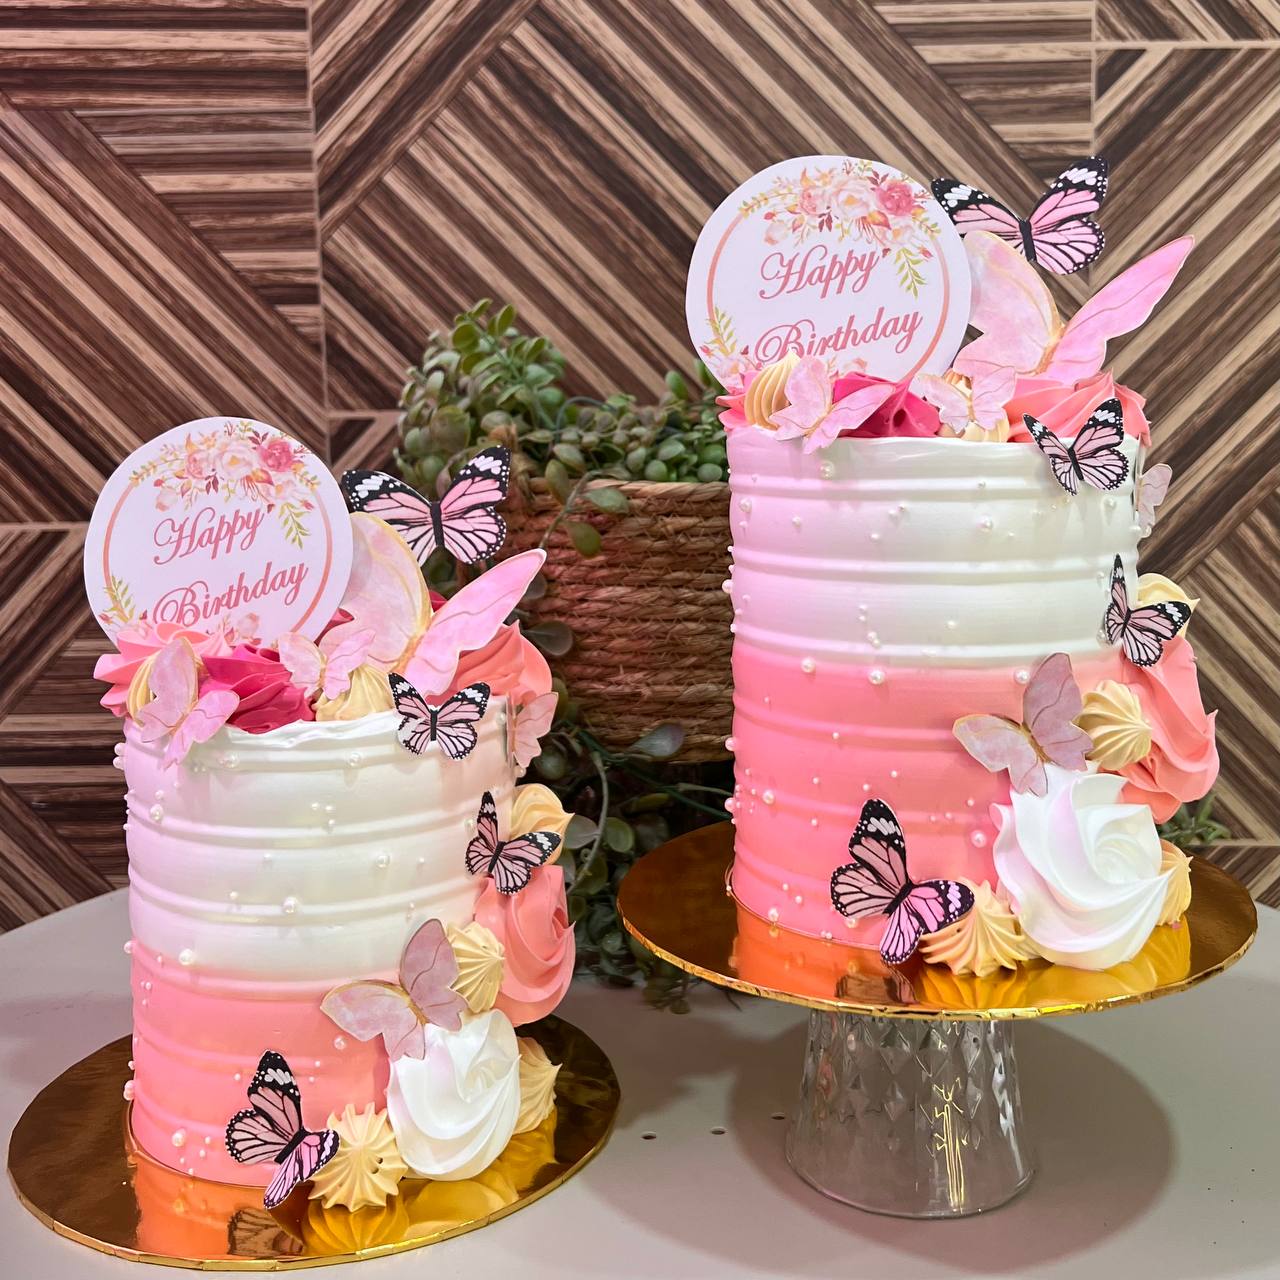 Pinky angry birds cake - Decorated Cake by iriene wang - CakesDecor